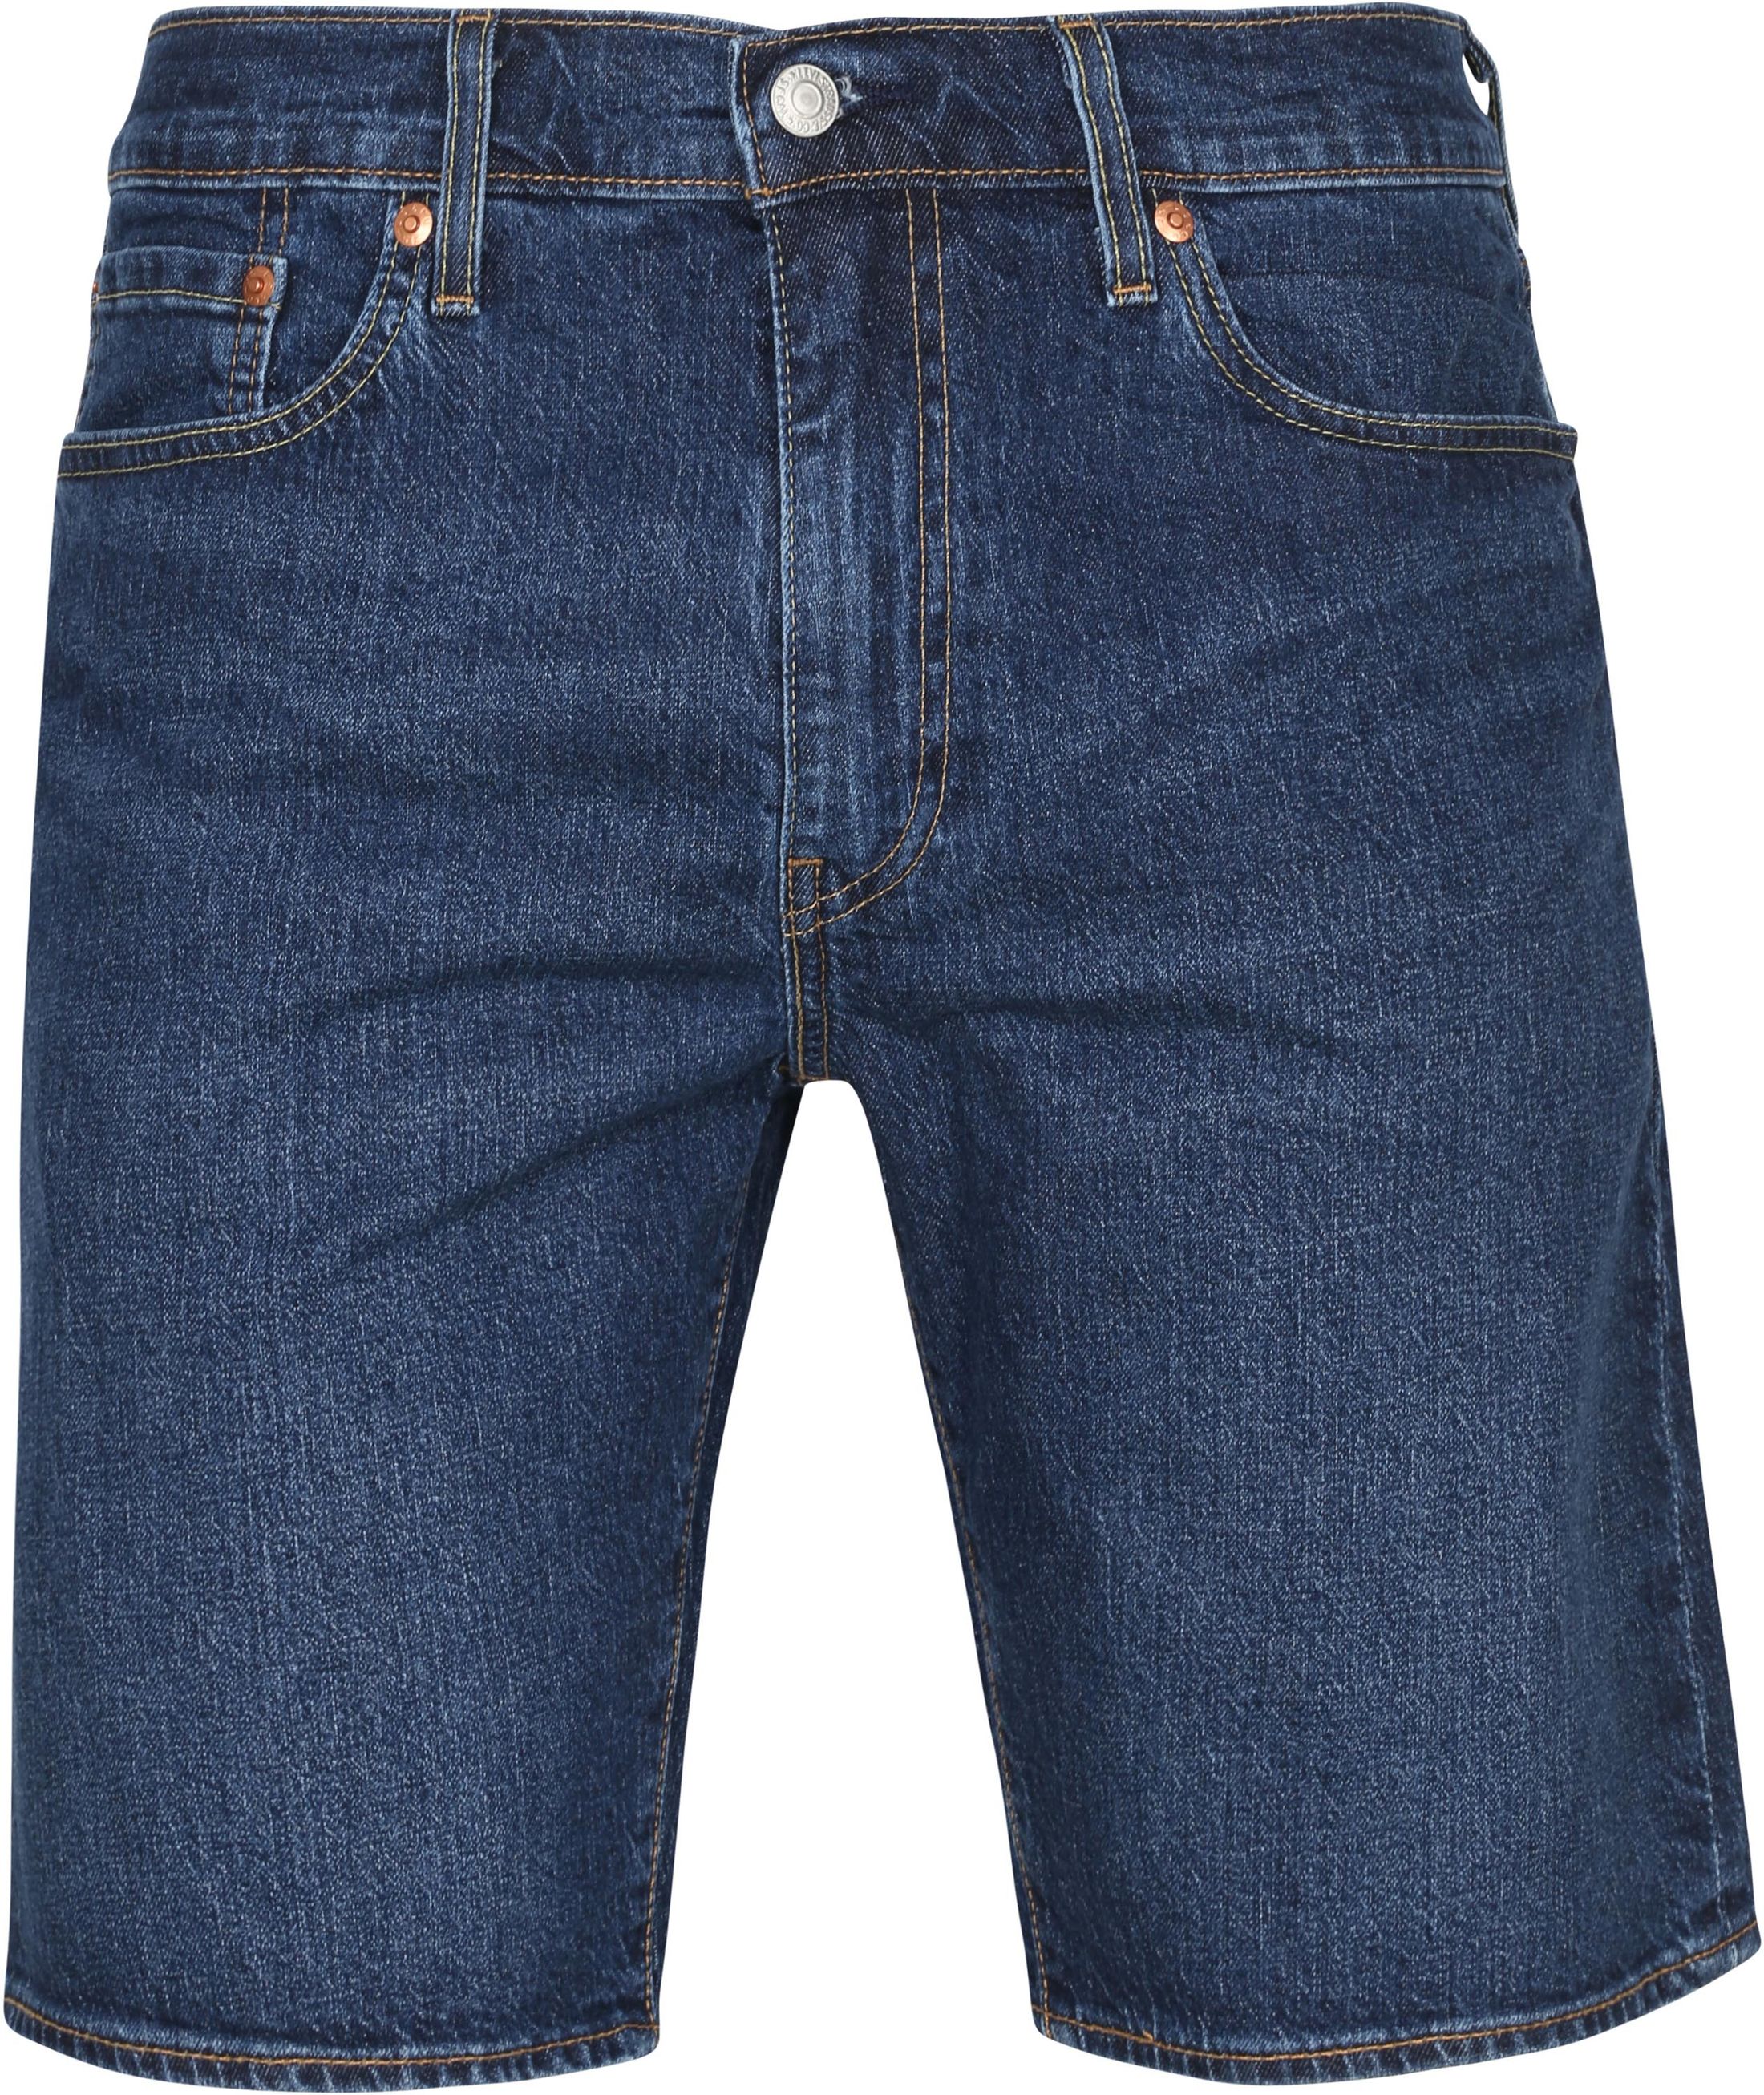 Levi’s 405 Standard Shorts Dark Denim Blue size 40